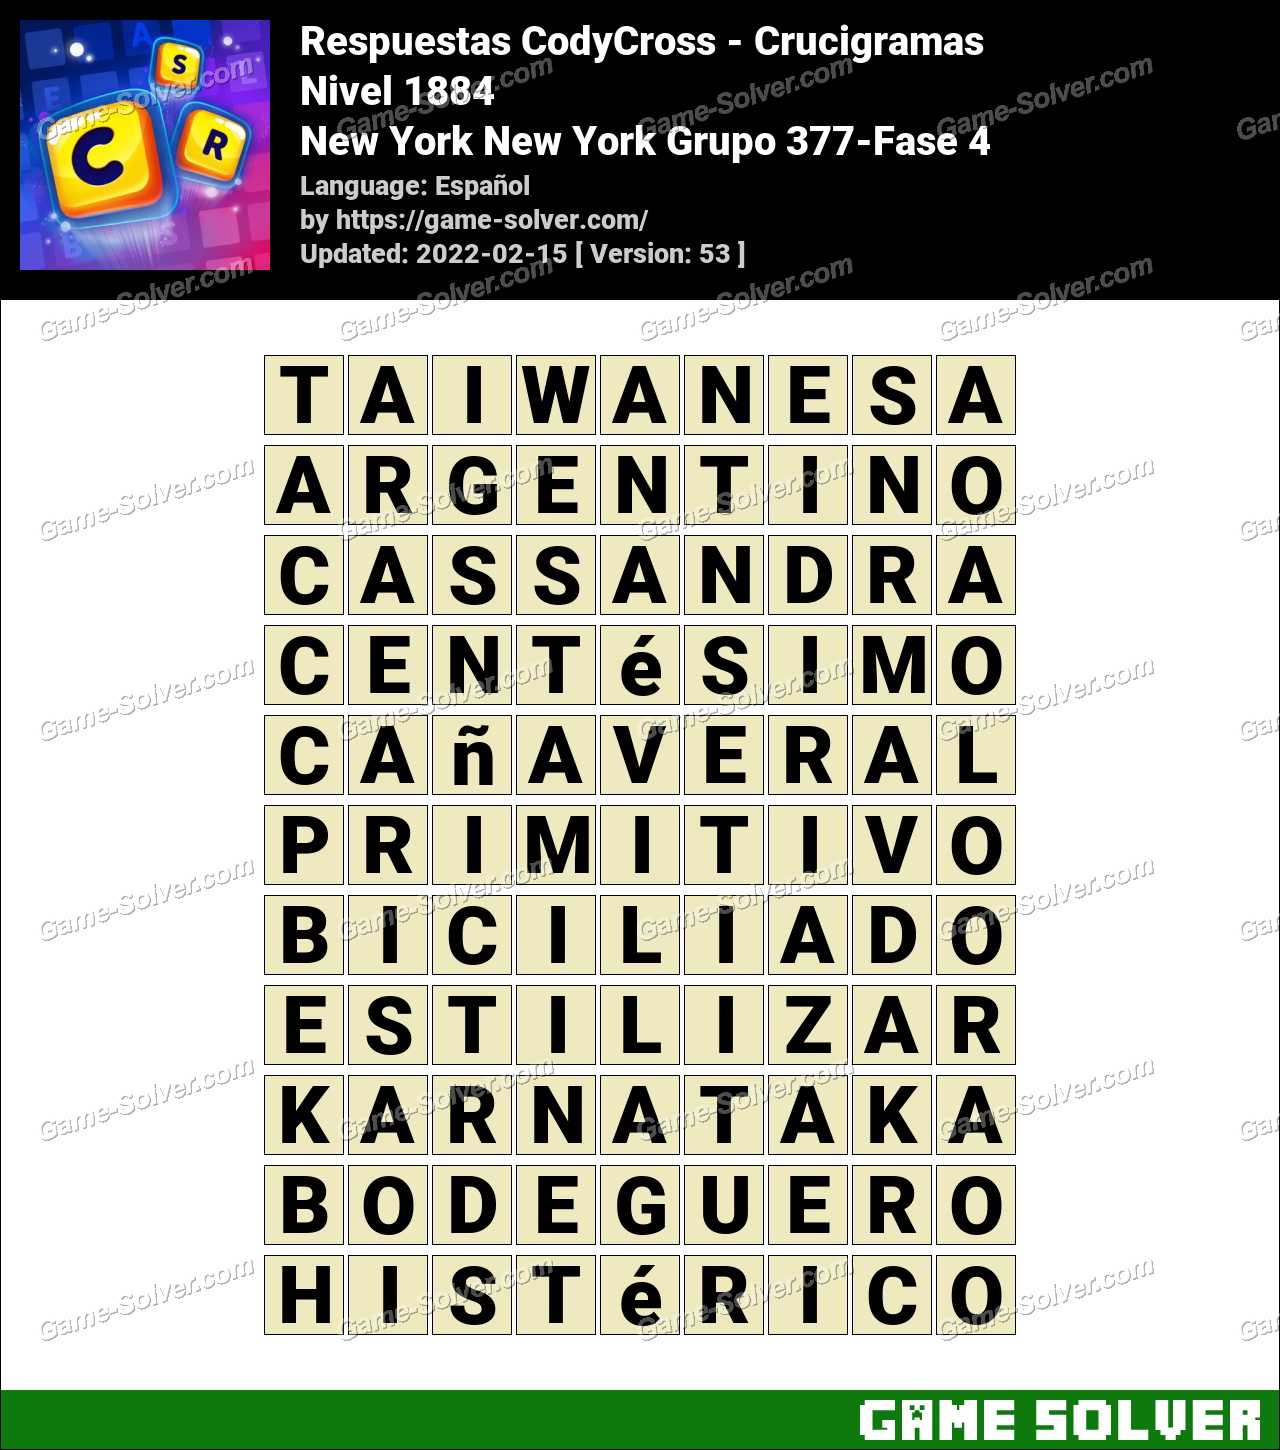 Respostas CodyCross New York, New York! Grupo 368-Fase 4 • Game Solver